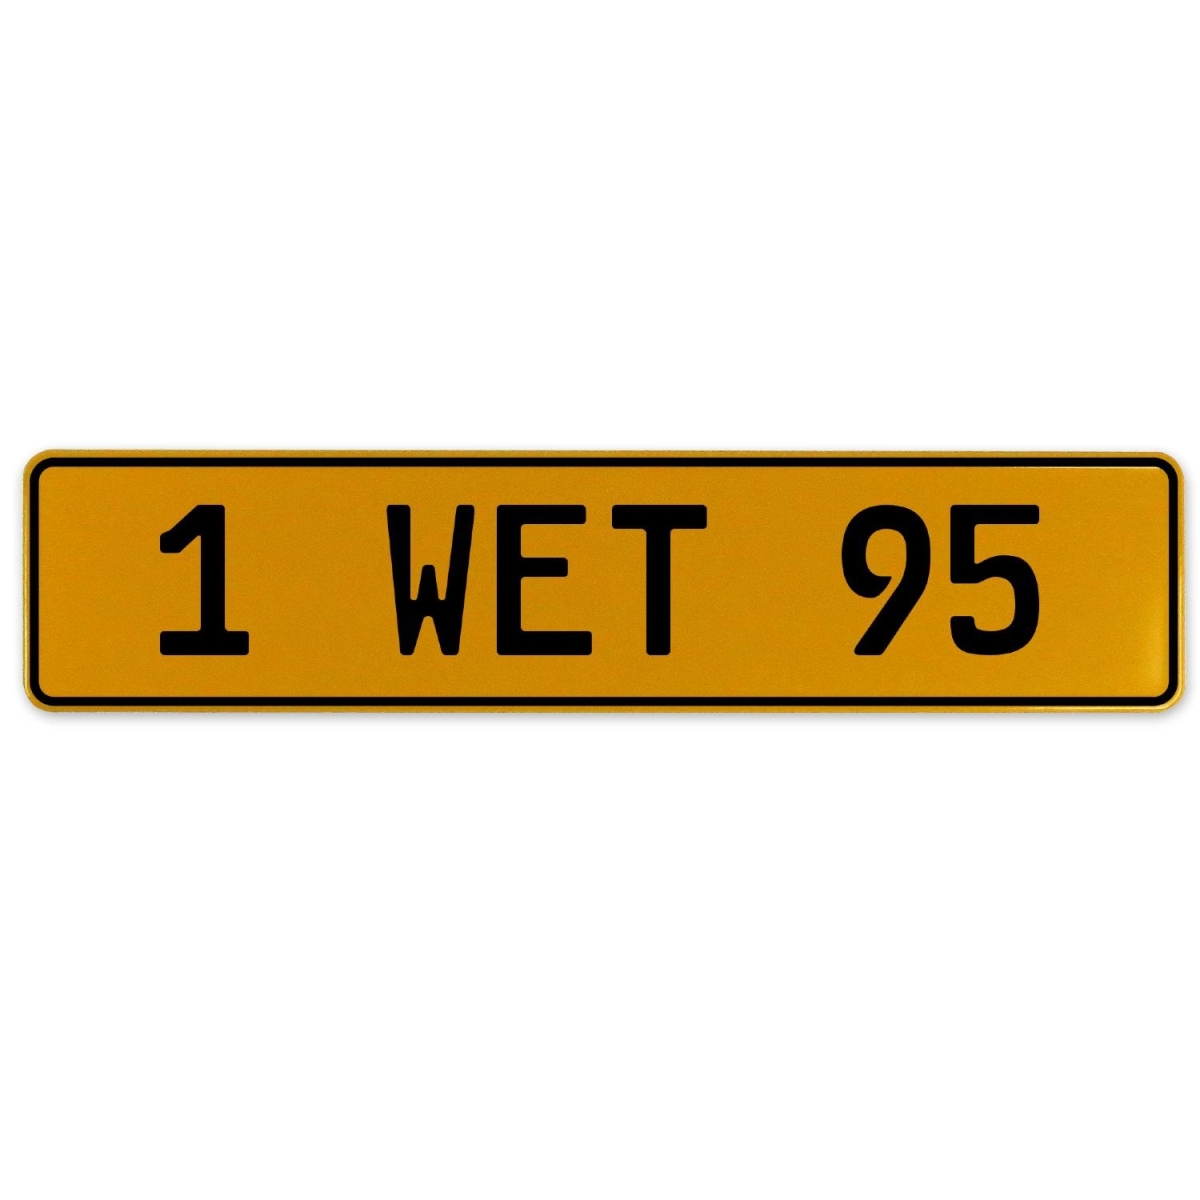 1 Wet 95 - Yellow Aluminum Street Sign Mancave Euro Plate Name Door Sign Wall